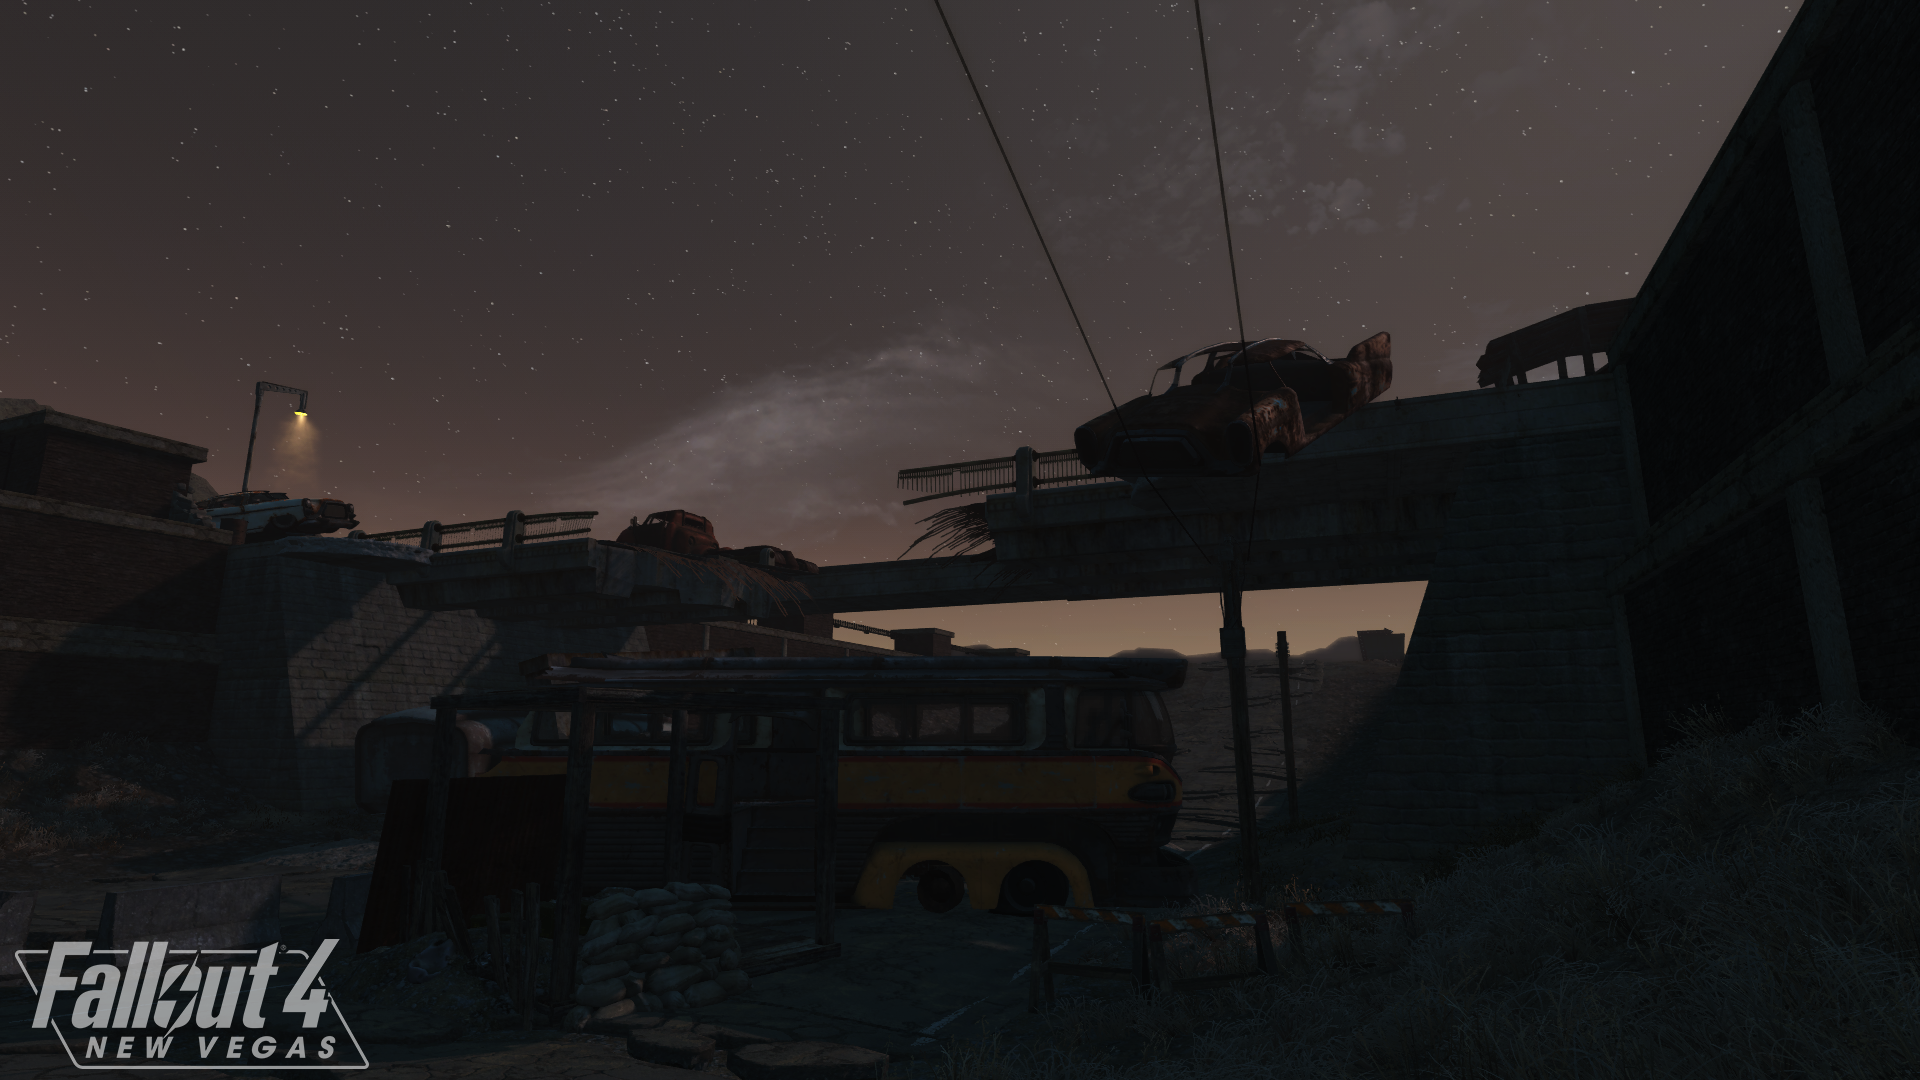 Fallout 4 New Vegas Mod Gets Beautiful New Screenshots Kitguru